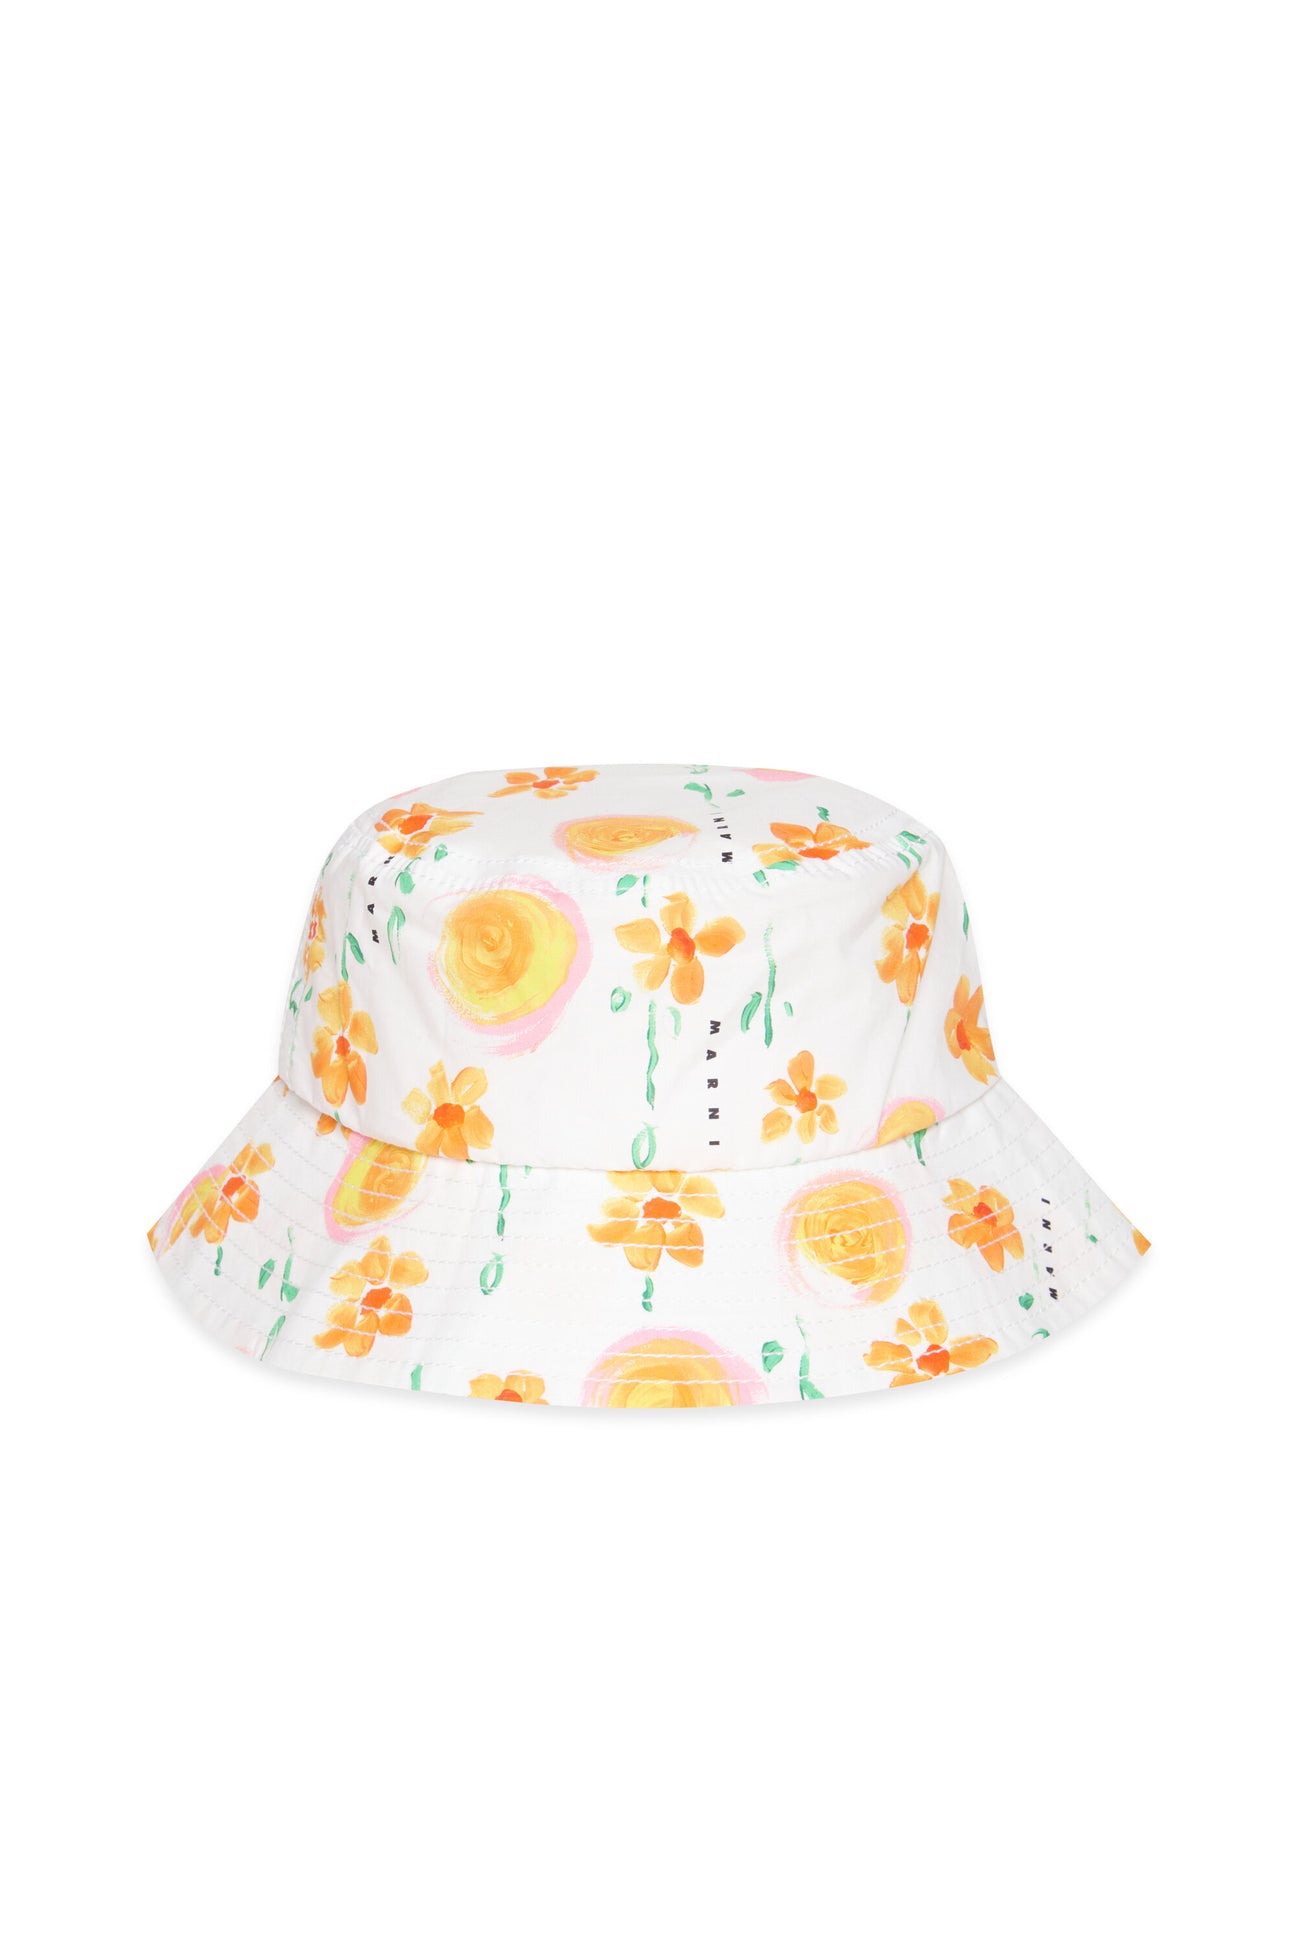 Sunny Day allover bucket hat Sunny Day allover bucket hat